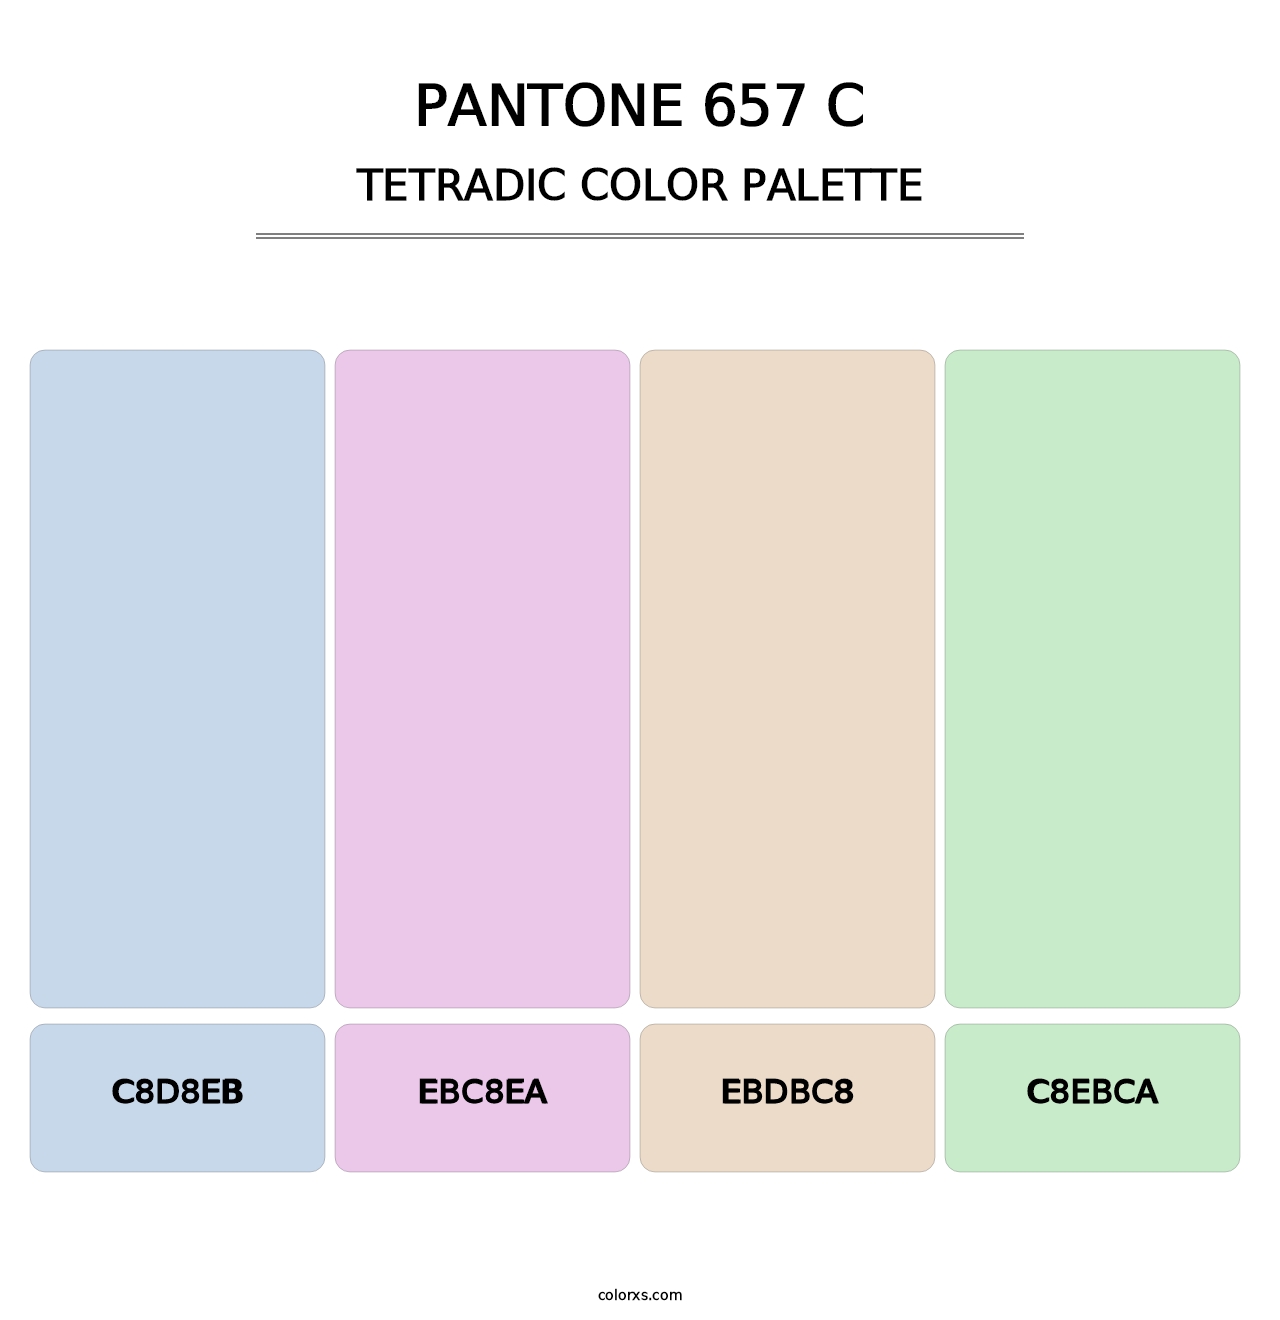 PANTONE 657 C - Tetradic Color Palette